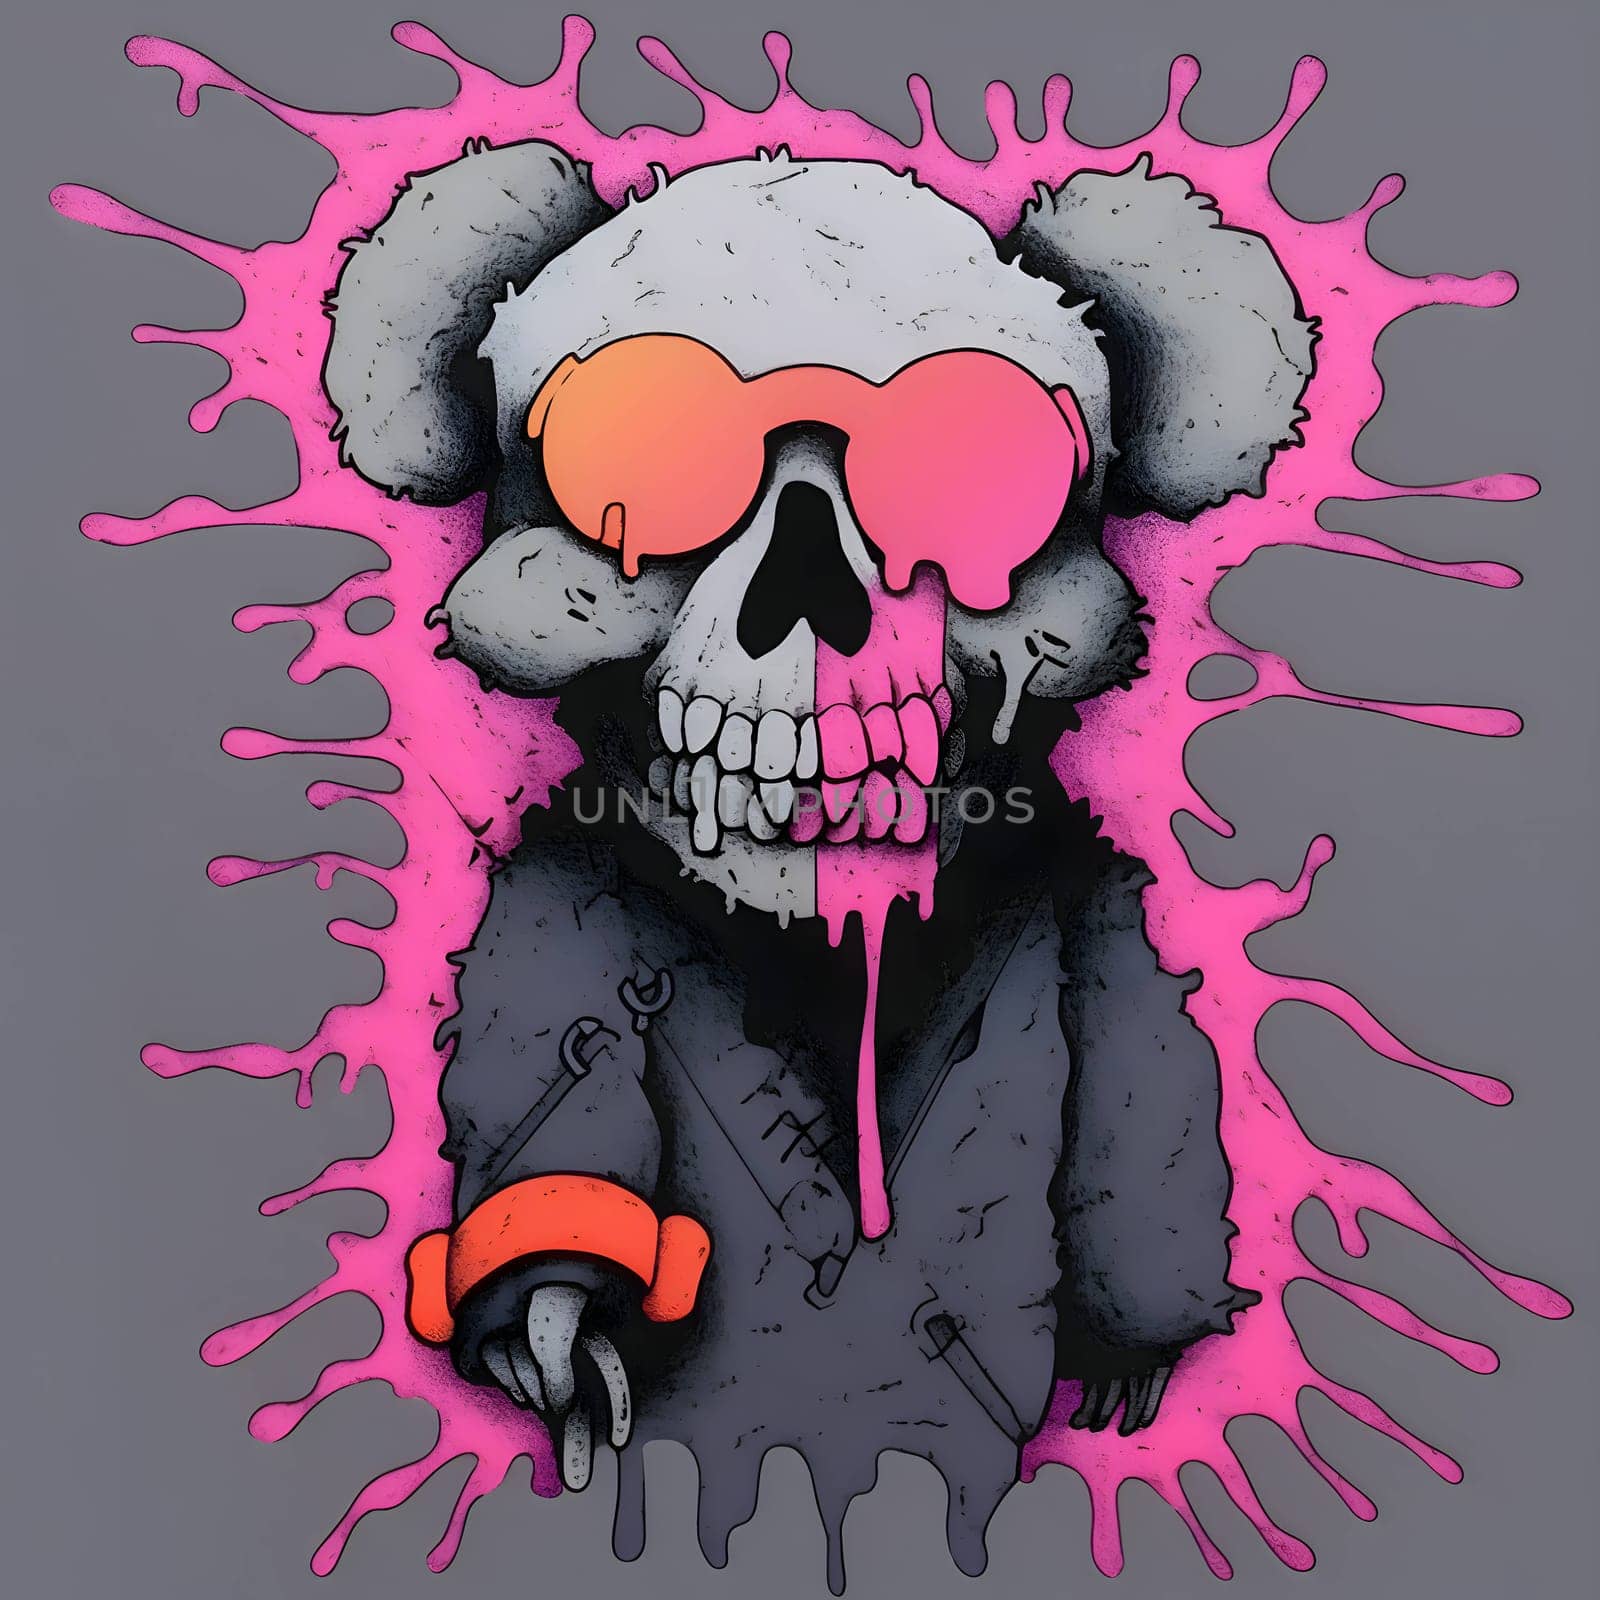 Abstract illustration: Skull of a koala in pink paint. Vector illustration.